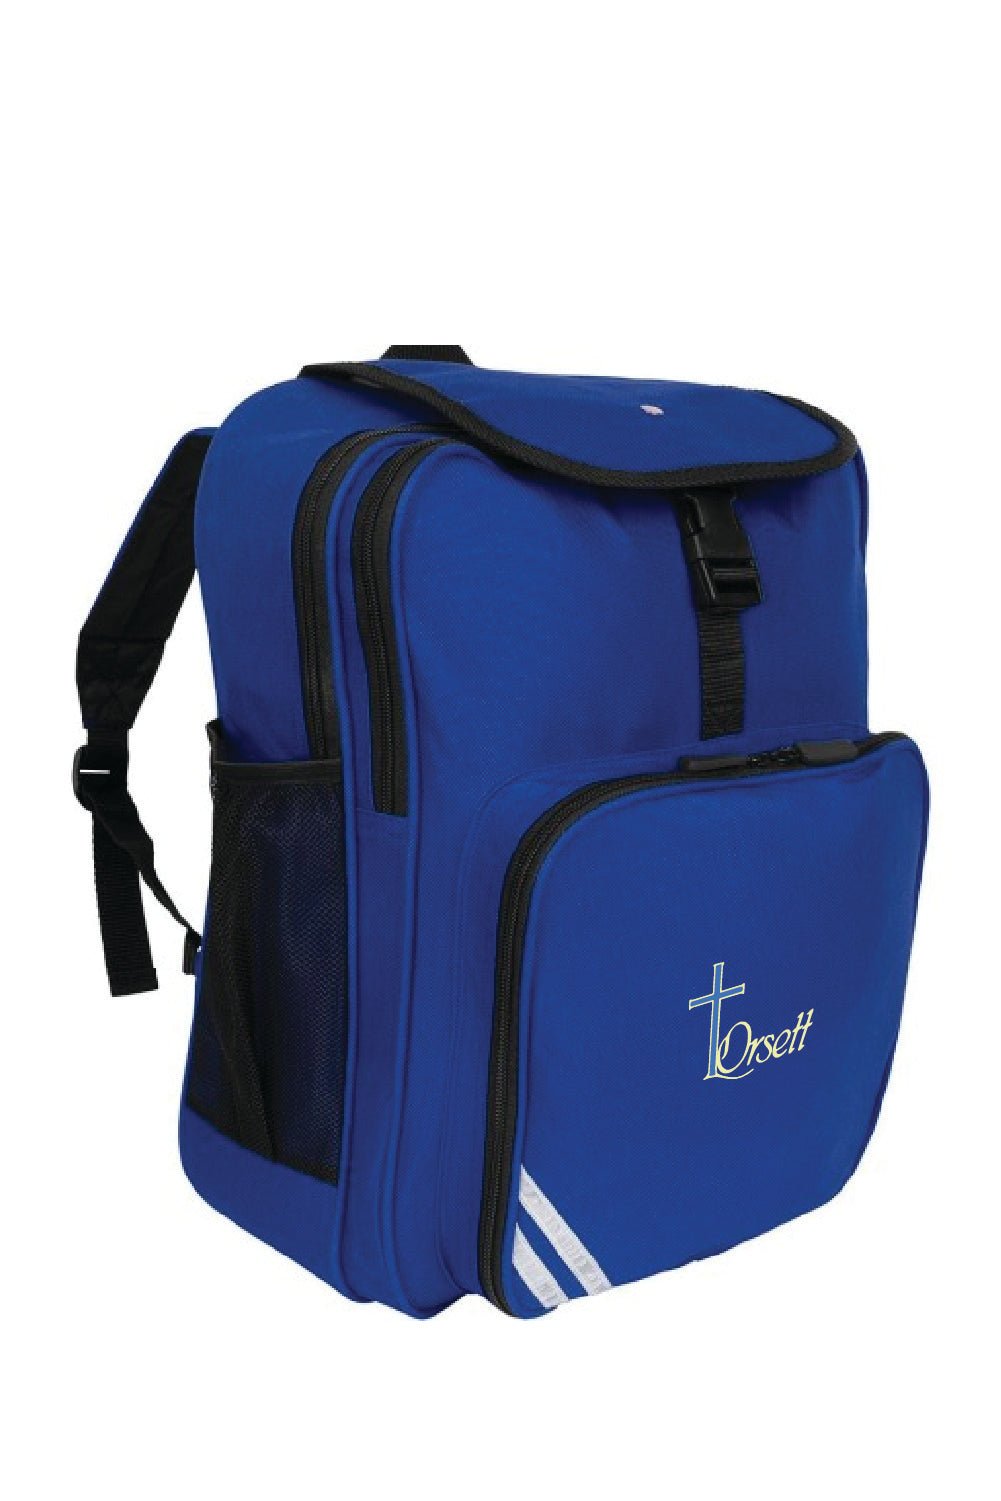 Orsett Primary Junior Backpack -new logo - Uniformwise Schoolwear